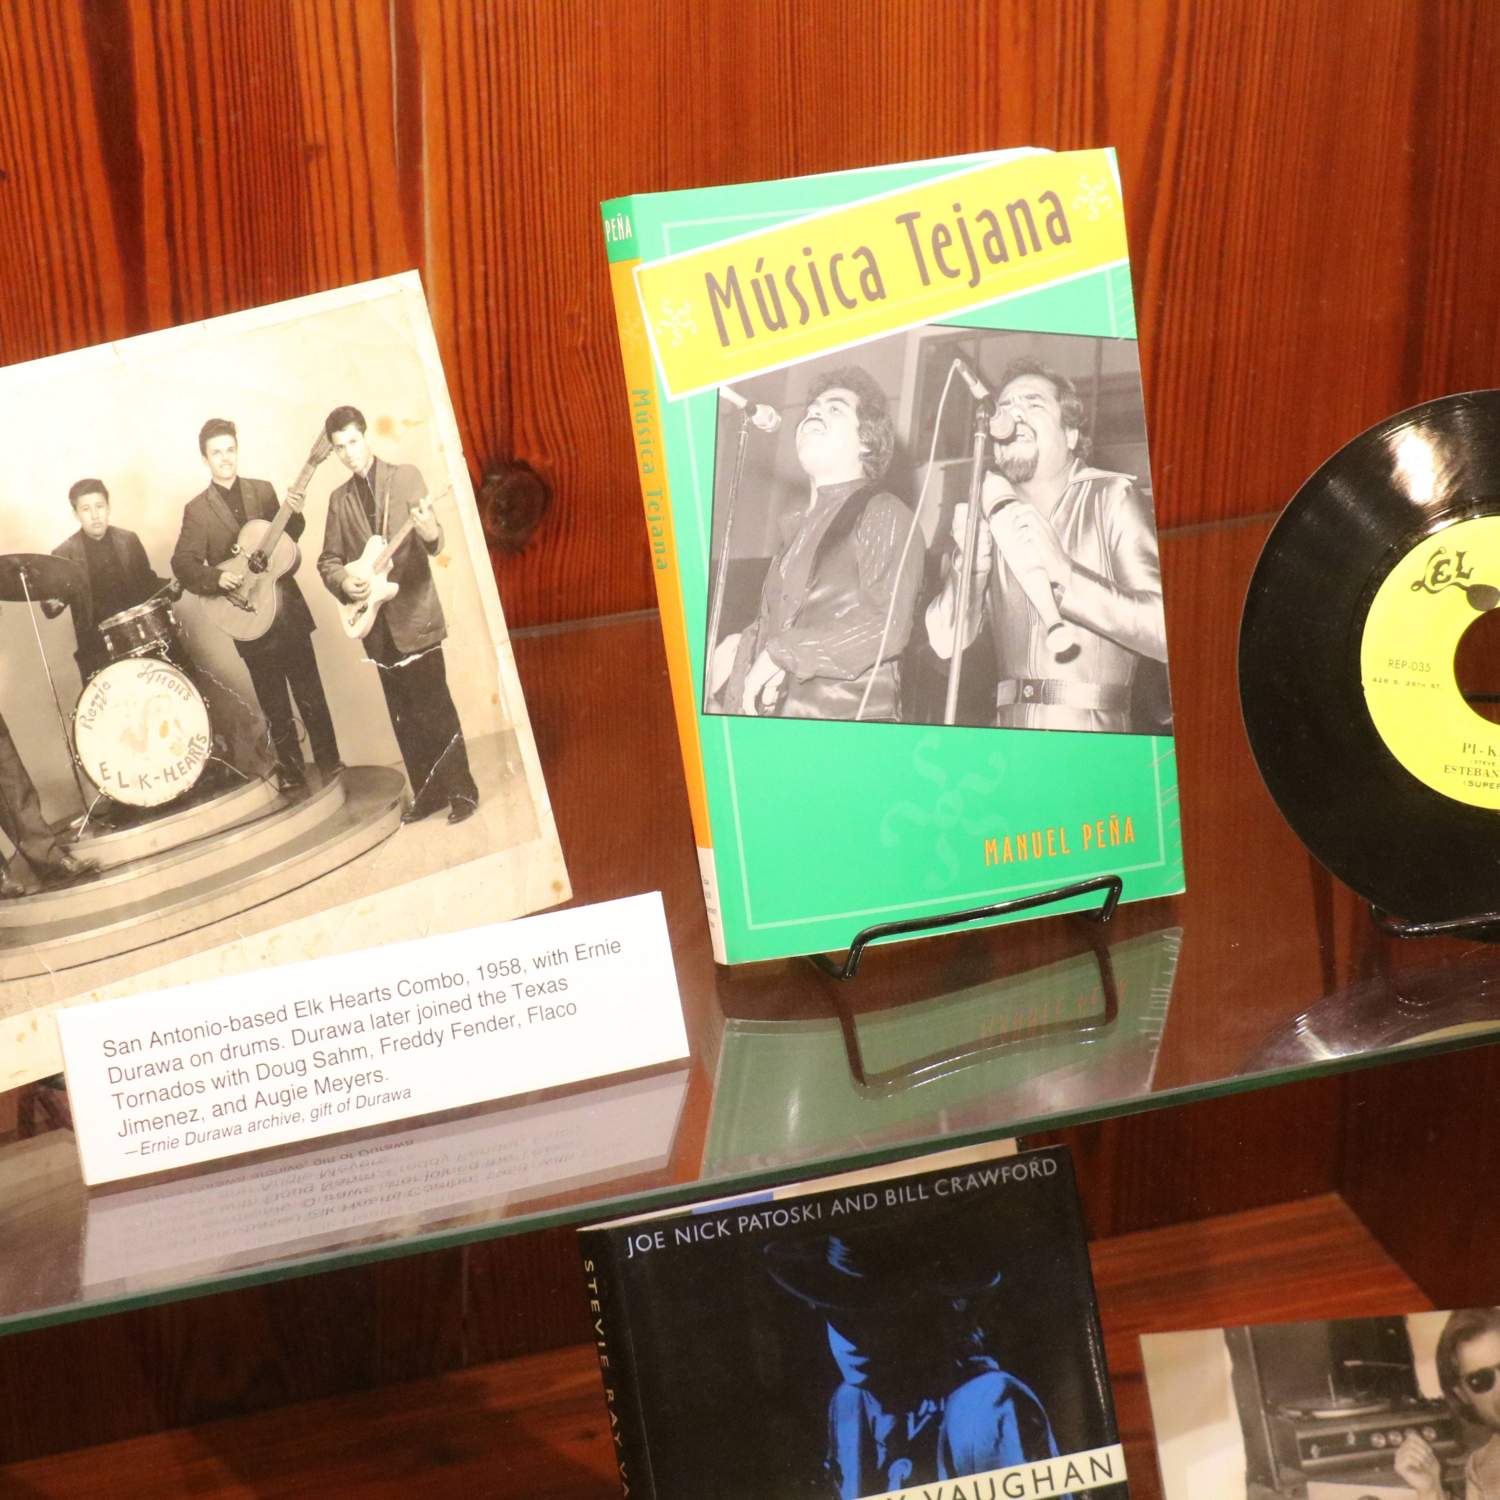 Photo of display case with music memorabilia